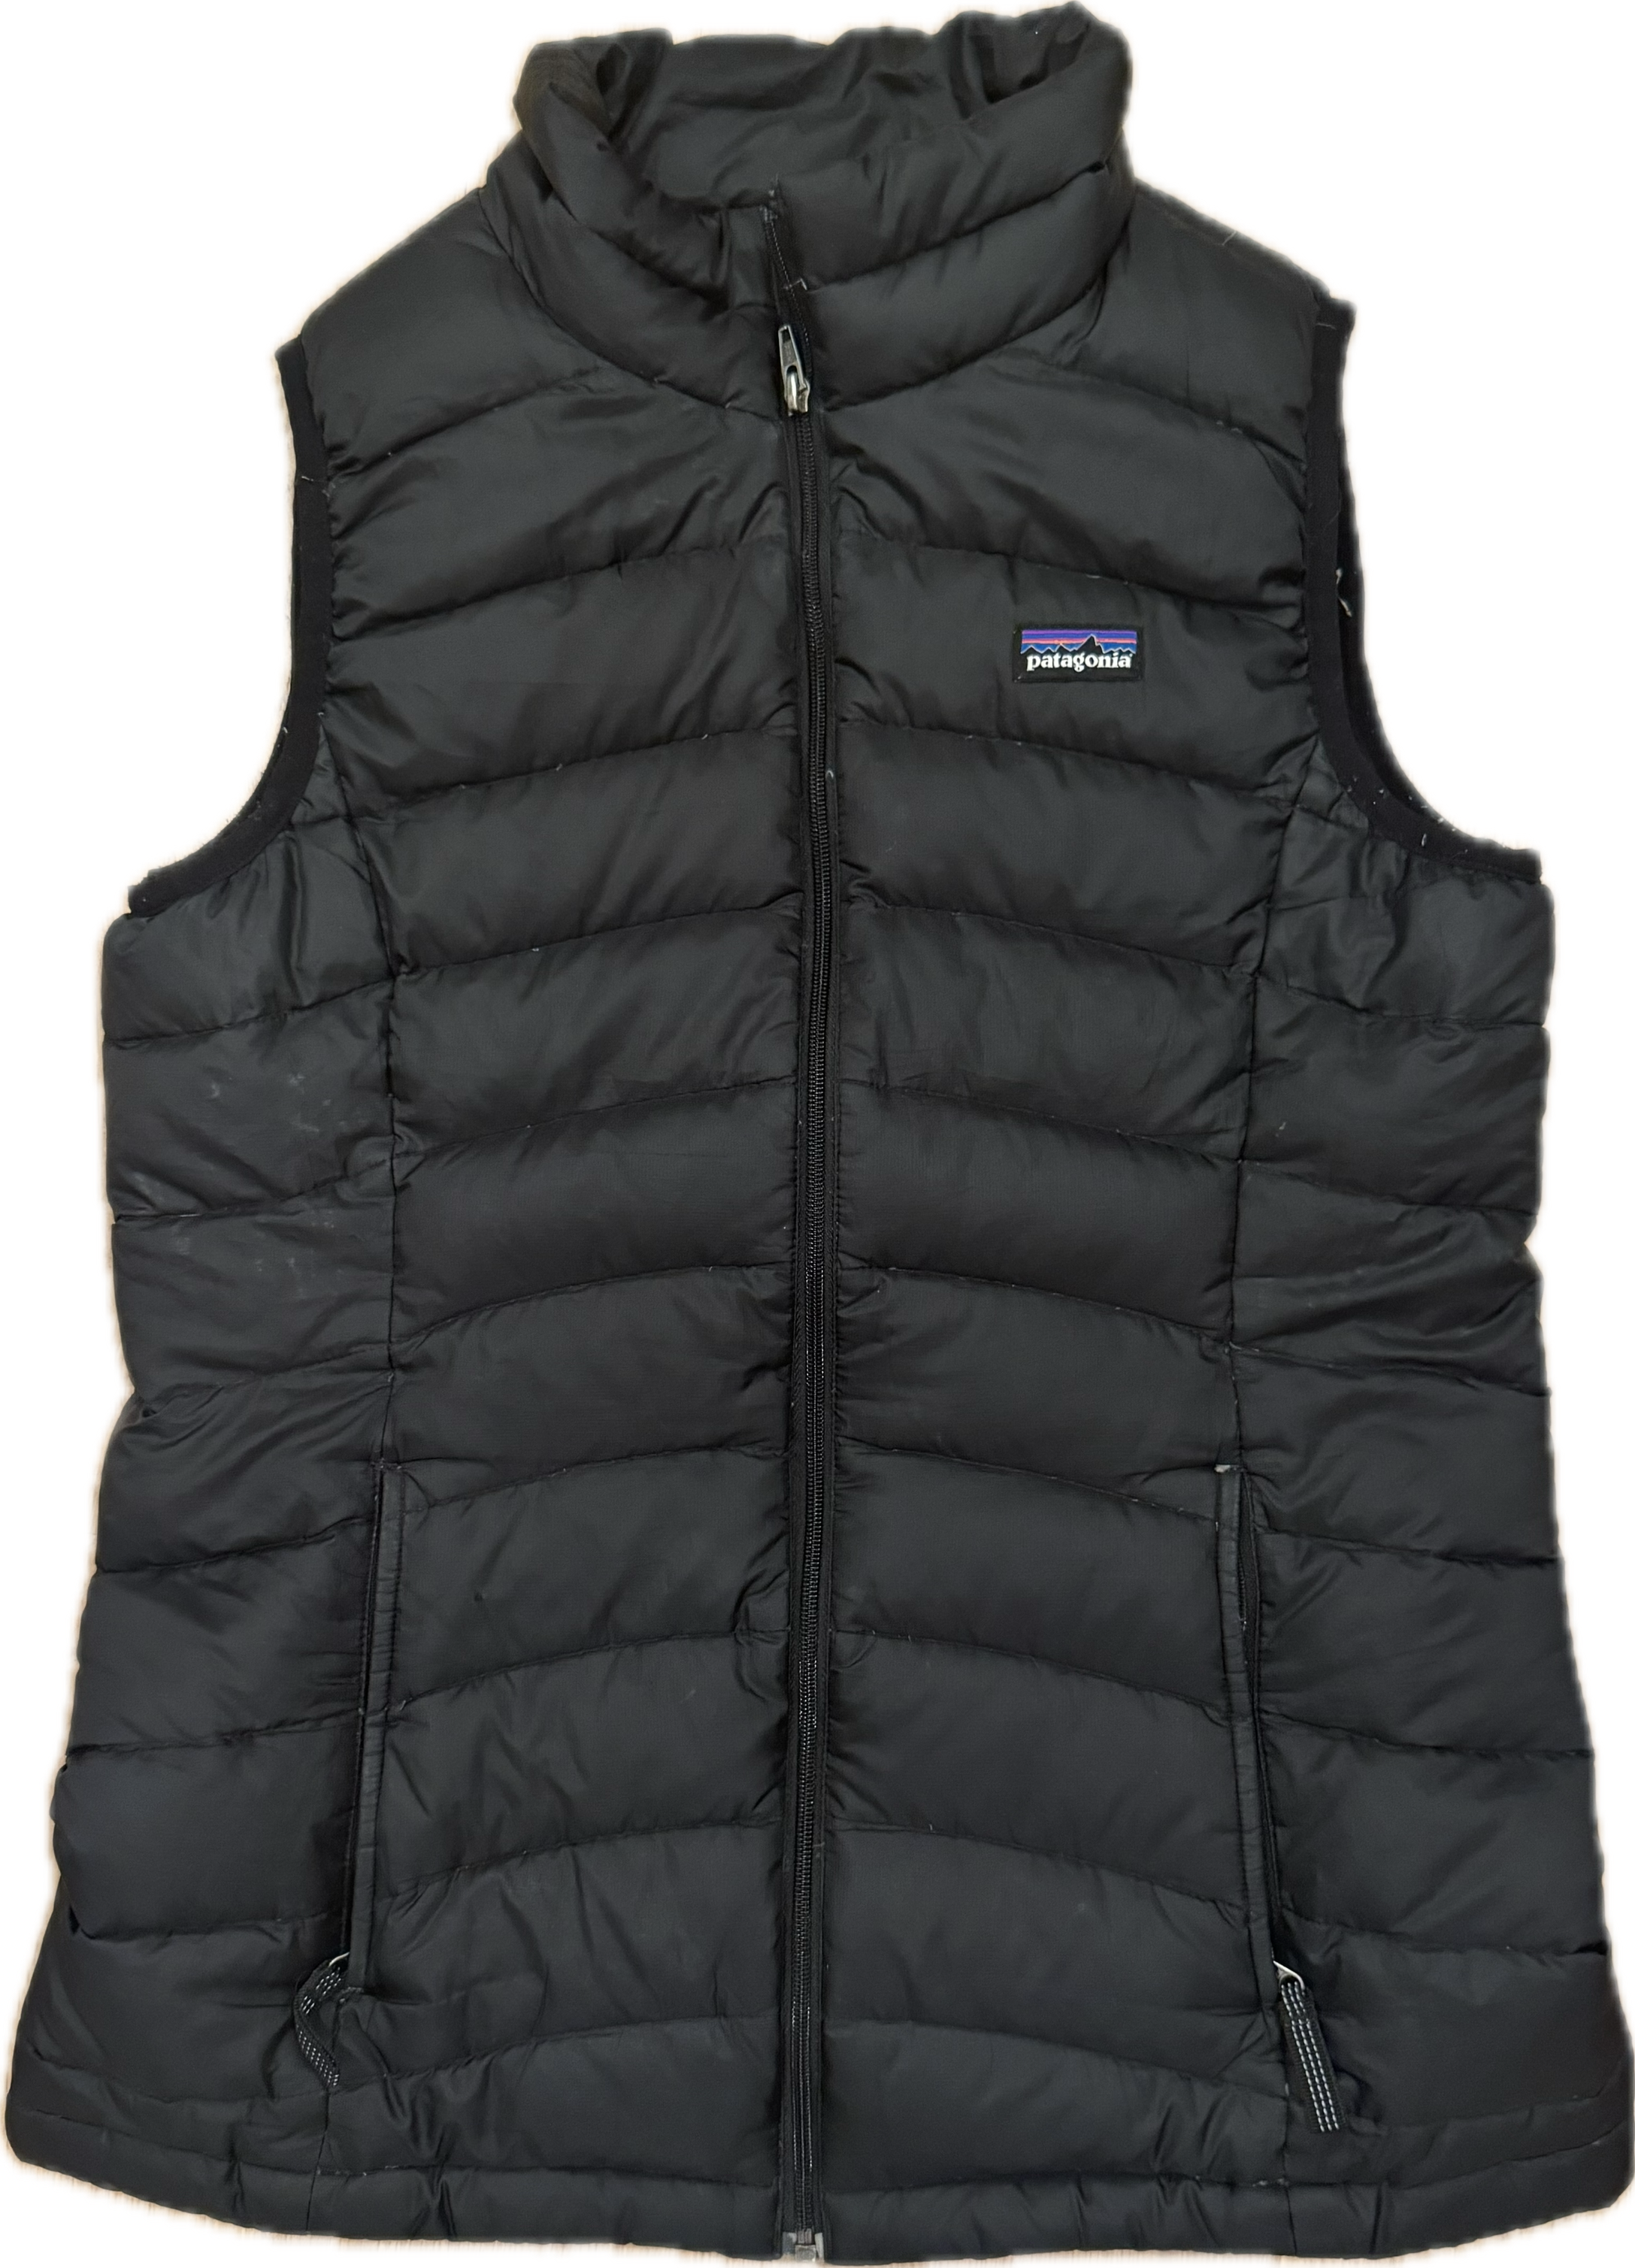 Patagonia Puffer Vest, Black Girls Size XL (14)